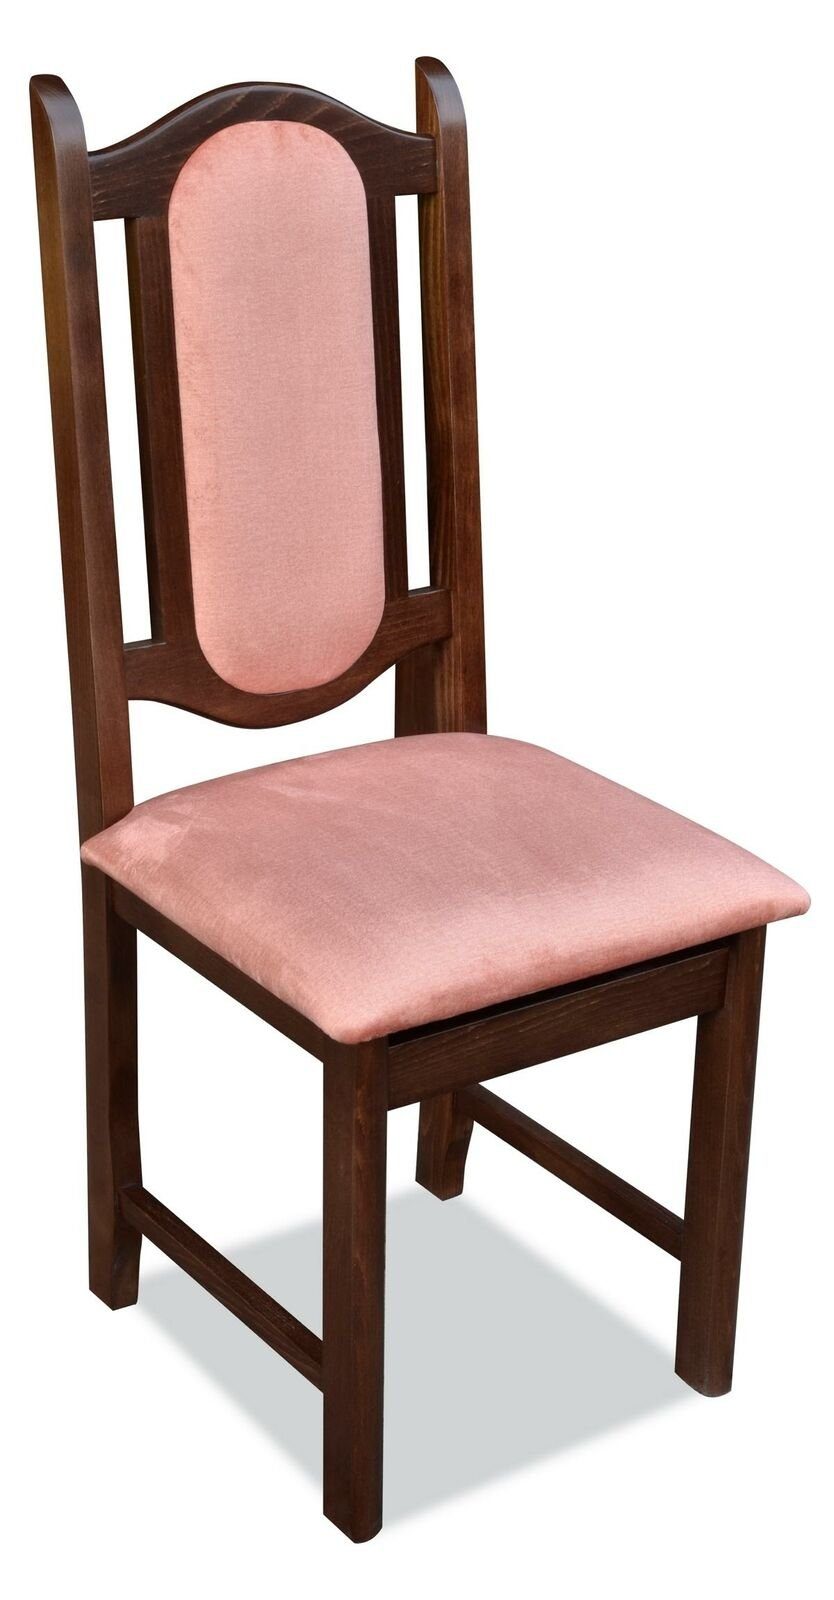 JVmoebel Stuhl, Königsstühle Stuhl Neu Stuhl Klassische №23 Esszimmer Sessel Polster 4x Stühle